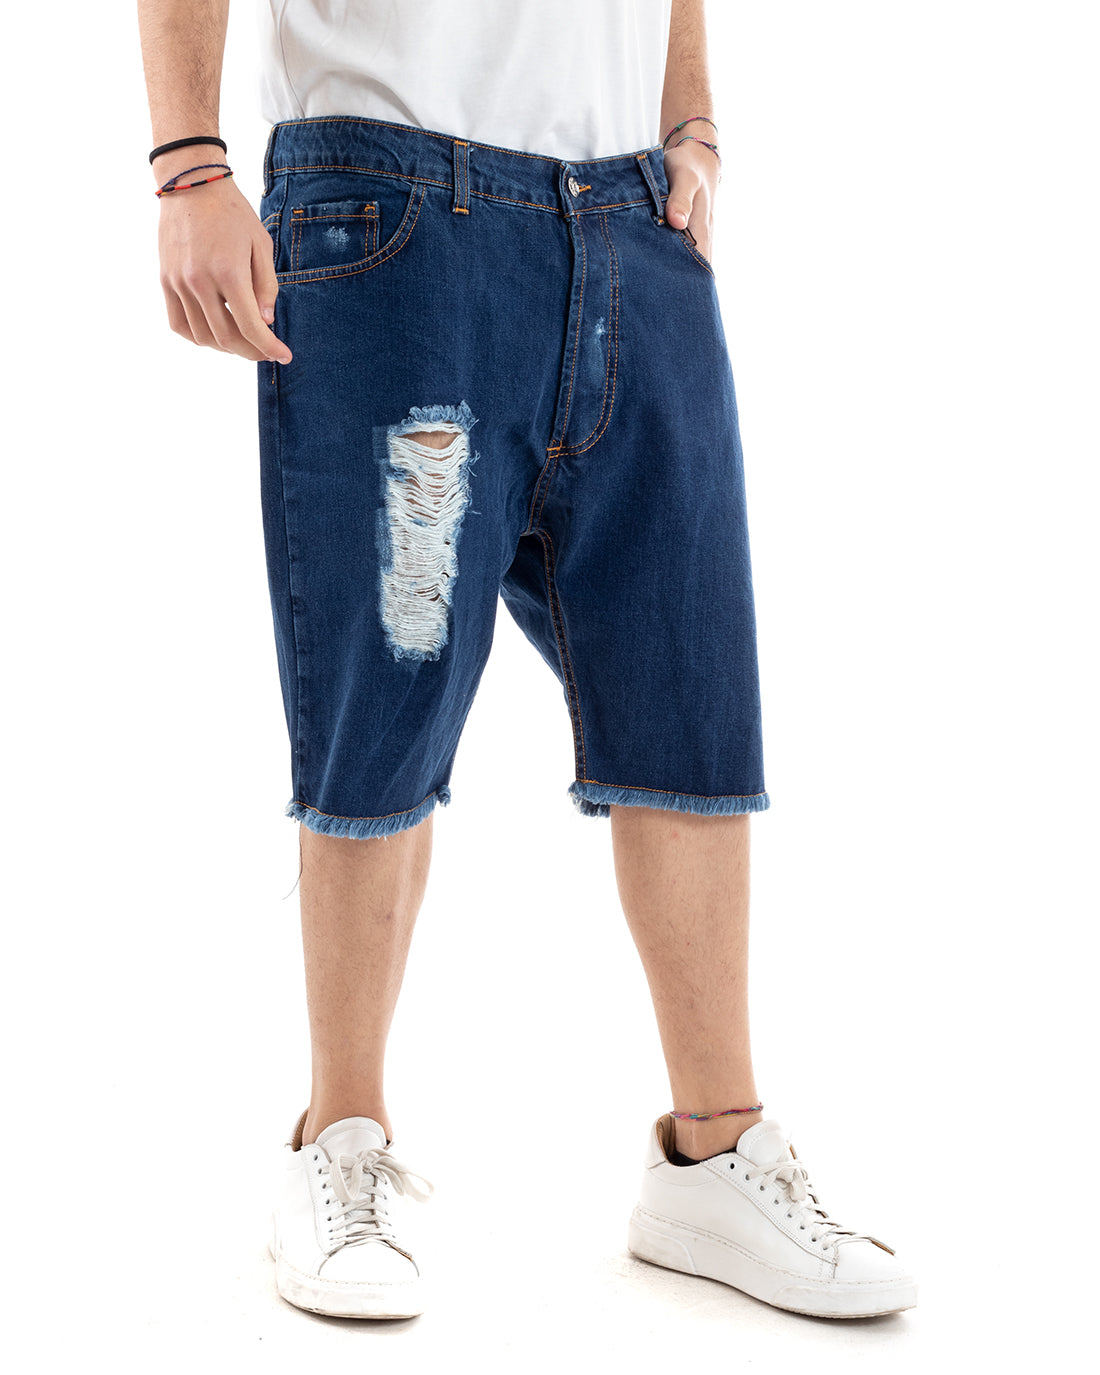 Bermuda Pantaloncino Jeans Uomo Denim Rotture Cinque Tasche GIOSAL-PC1108A